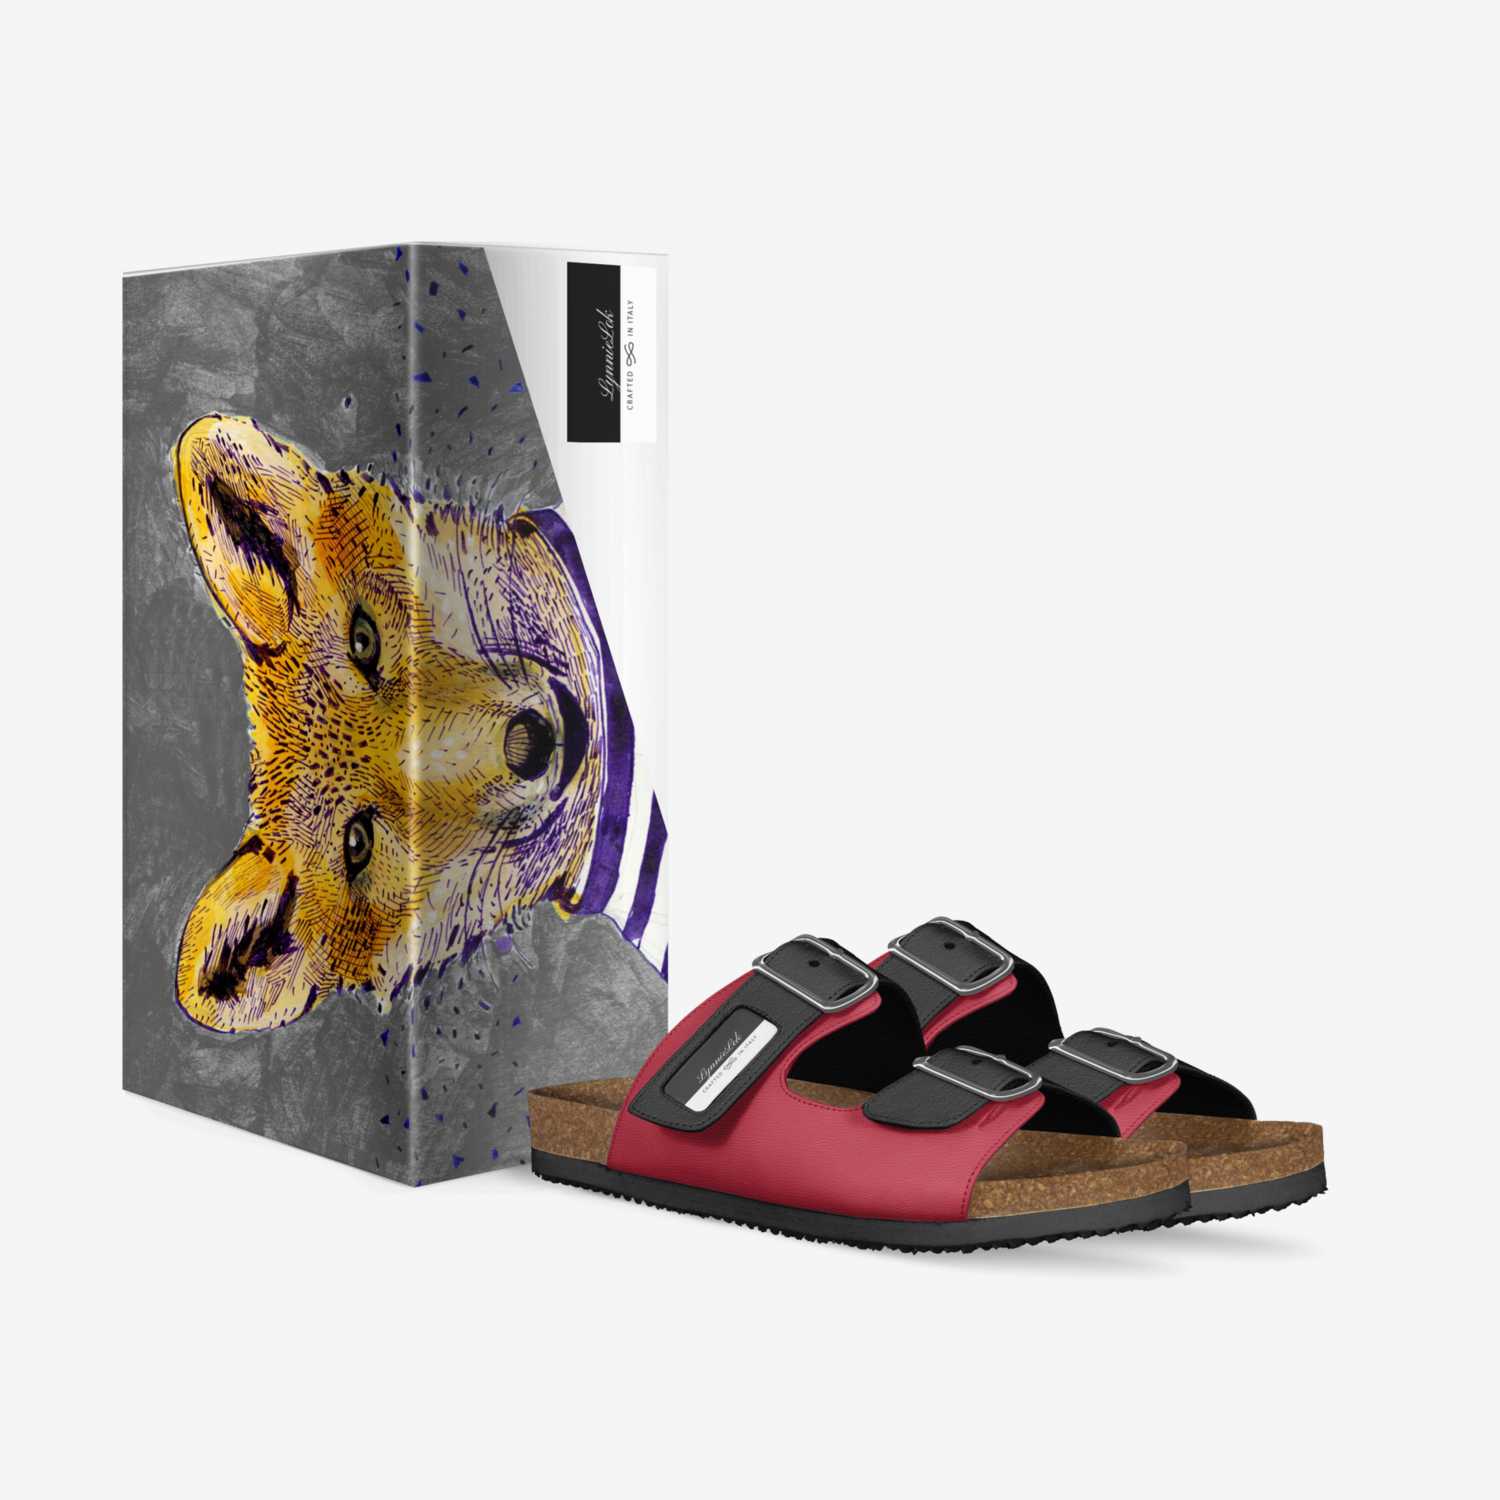 LynnieLok custom made in Italy shoes by Heidi Lynn Rolle | Box view